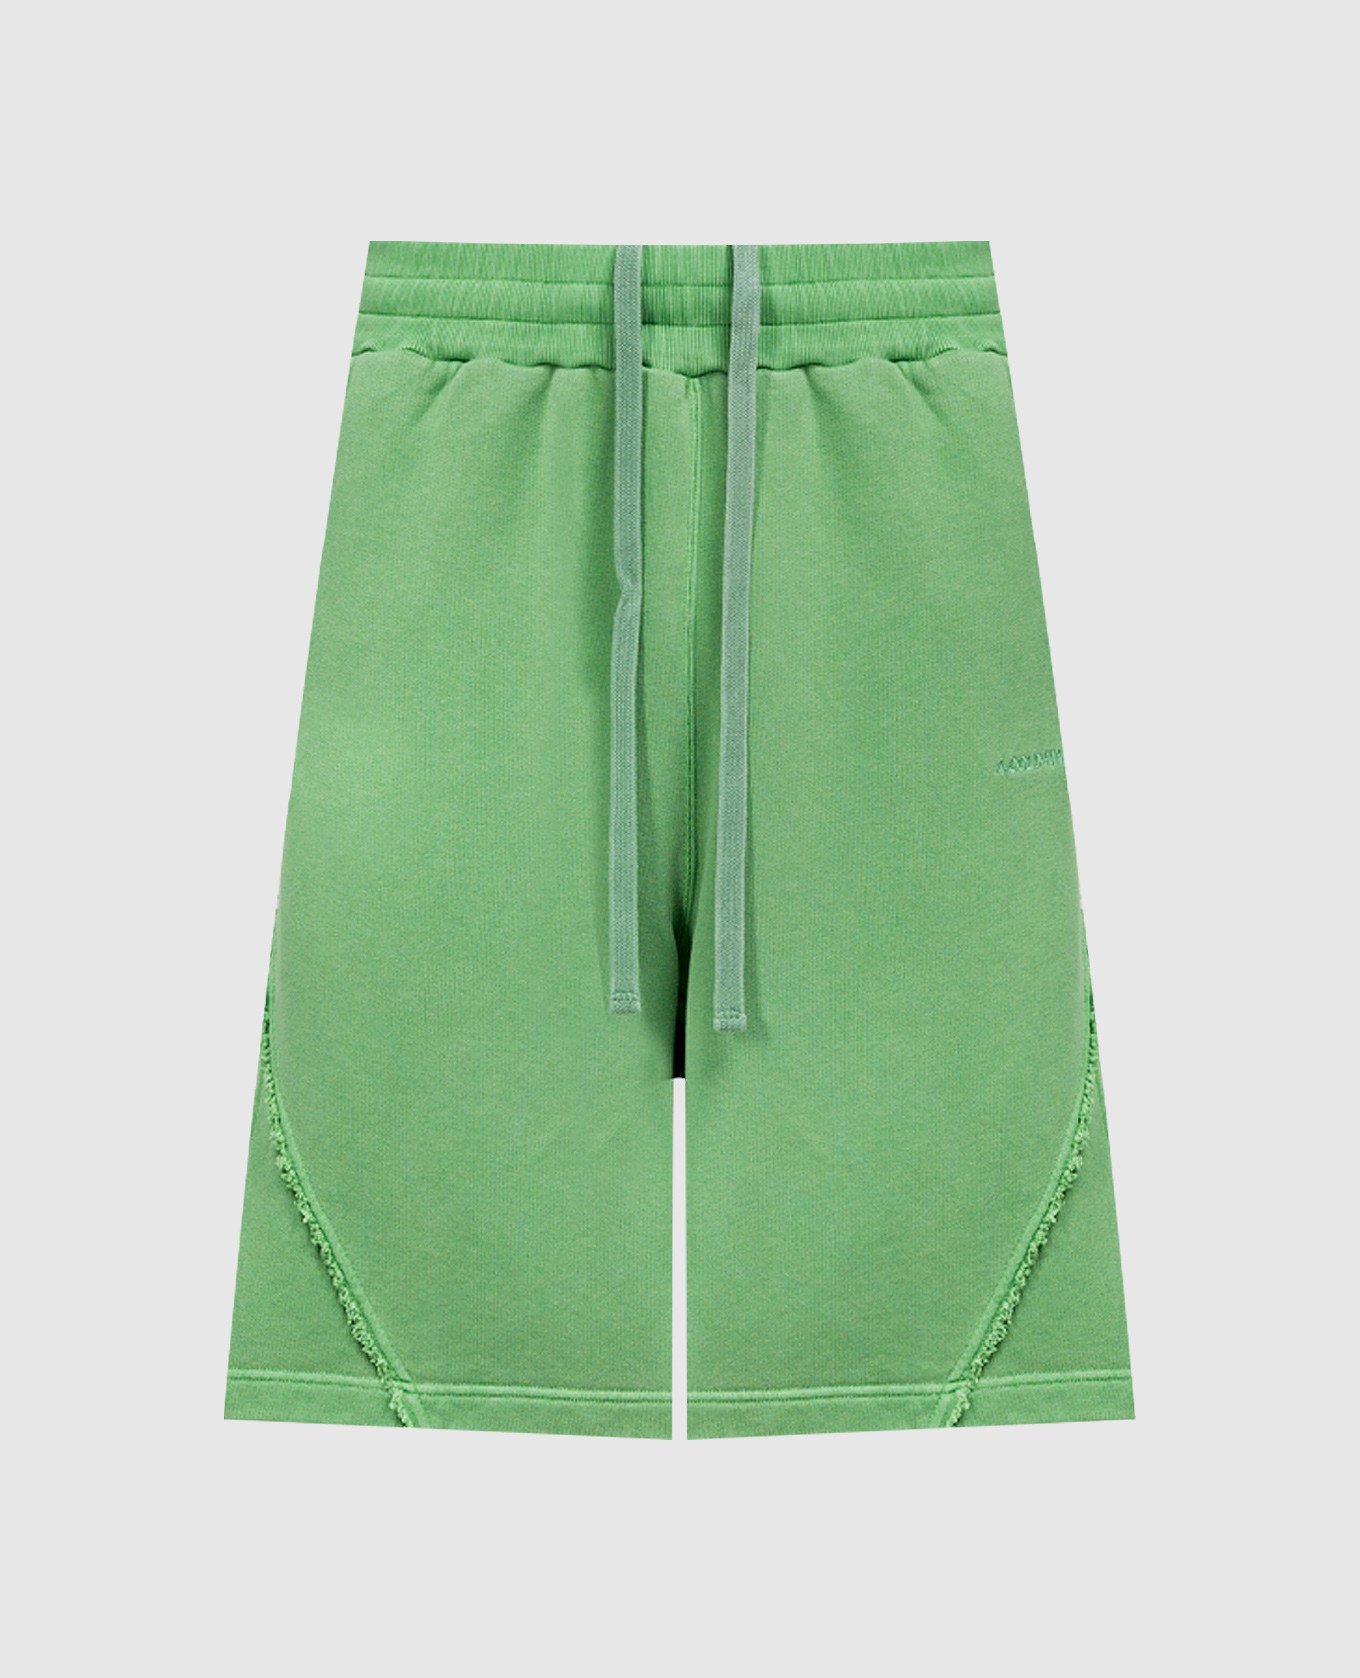 Cubist green shorts